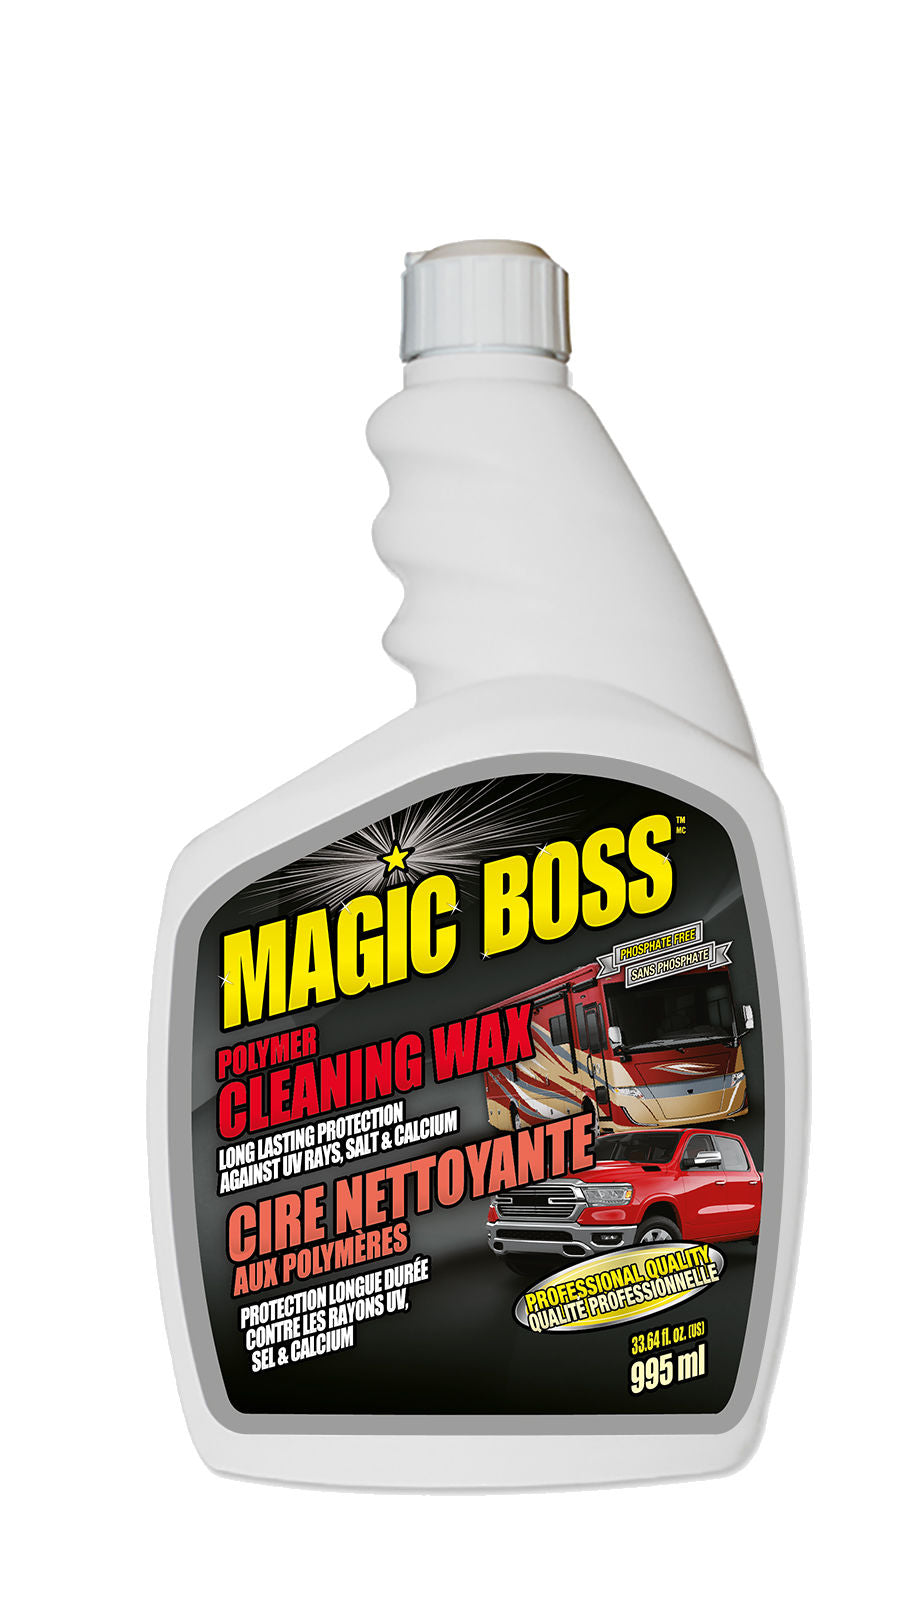 Magic Boss 1800 - Box of 12, Polymer Cleaning Wax (995 ml)